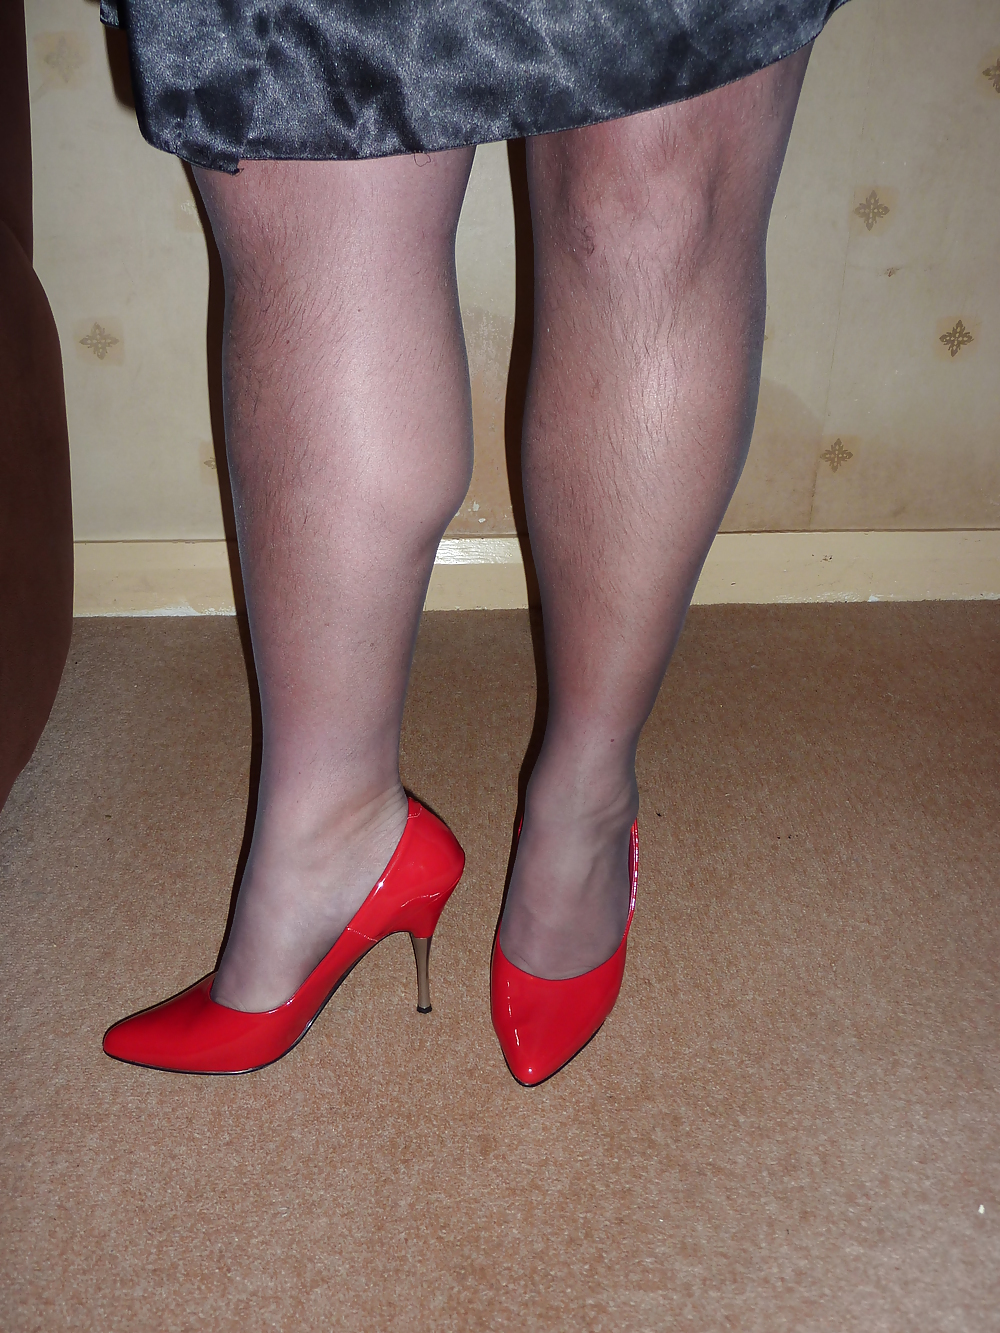 Legs, high heels #4496468